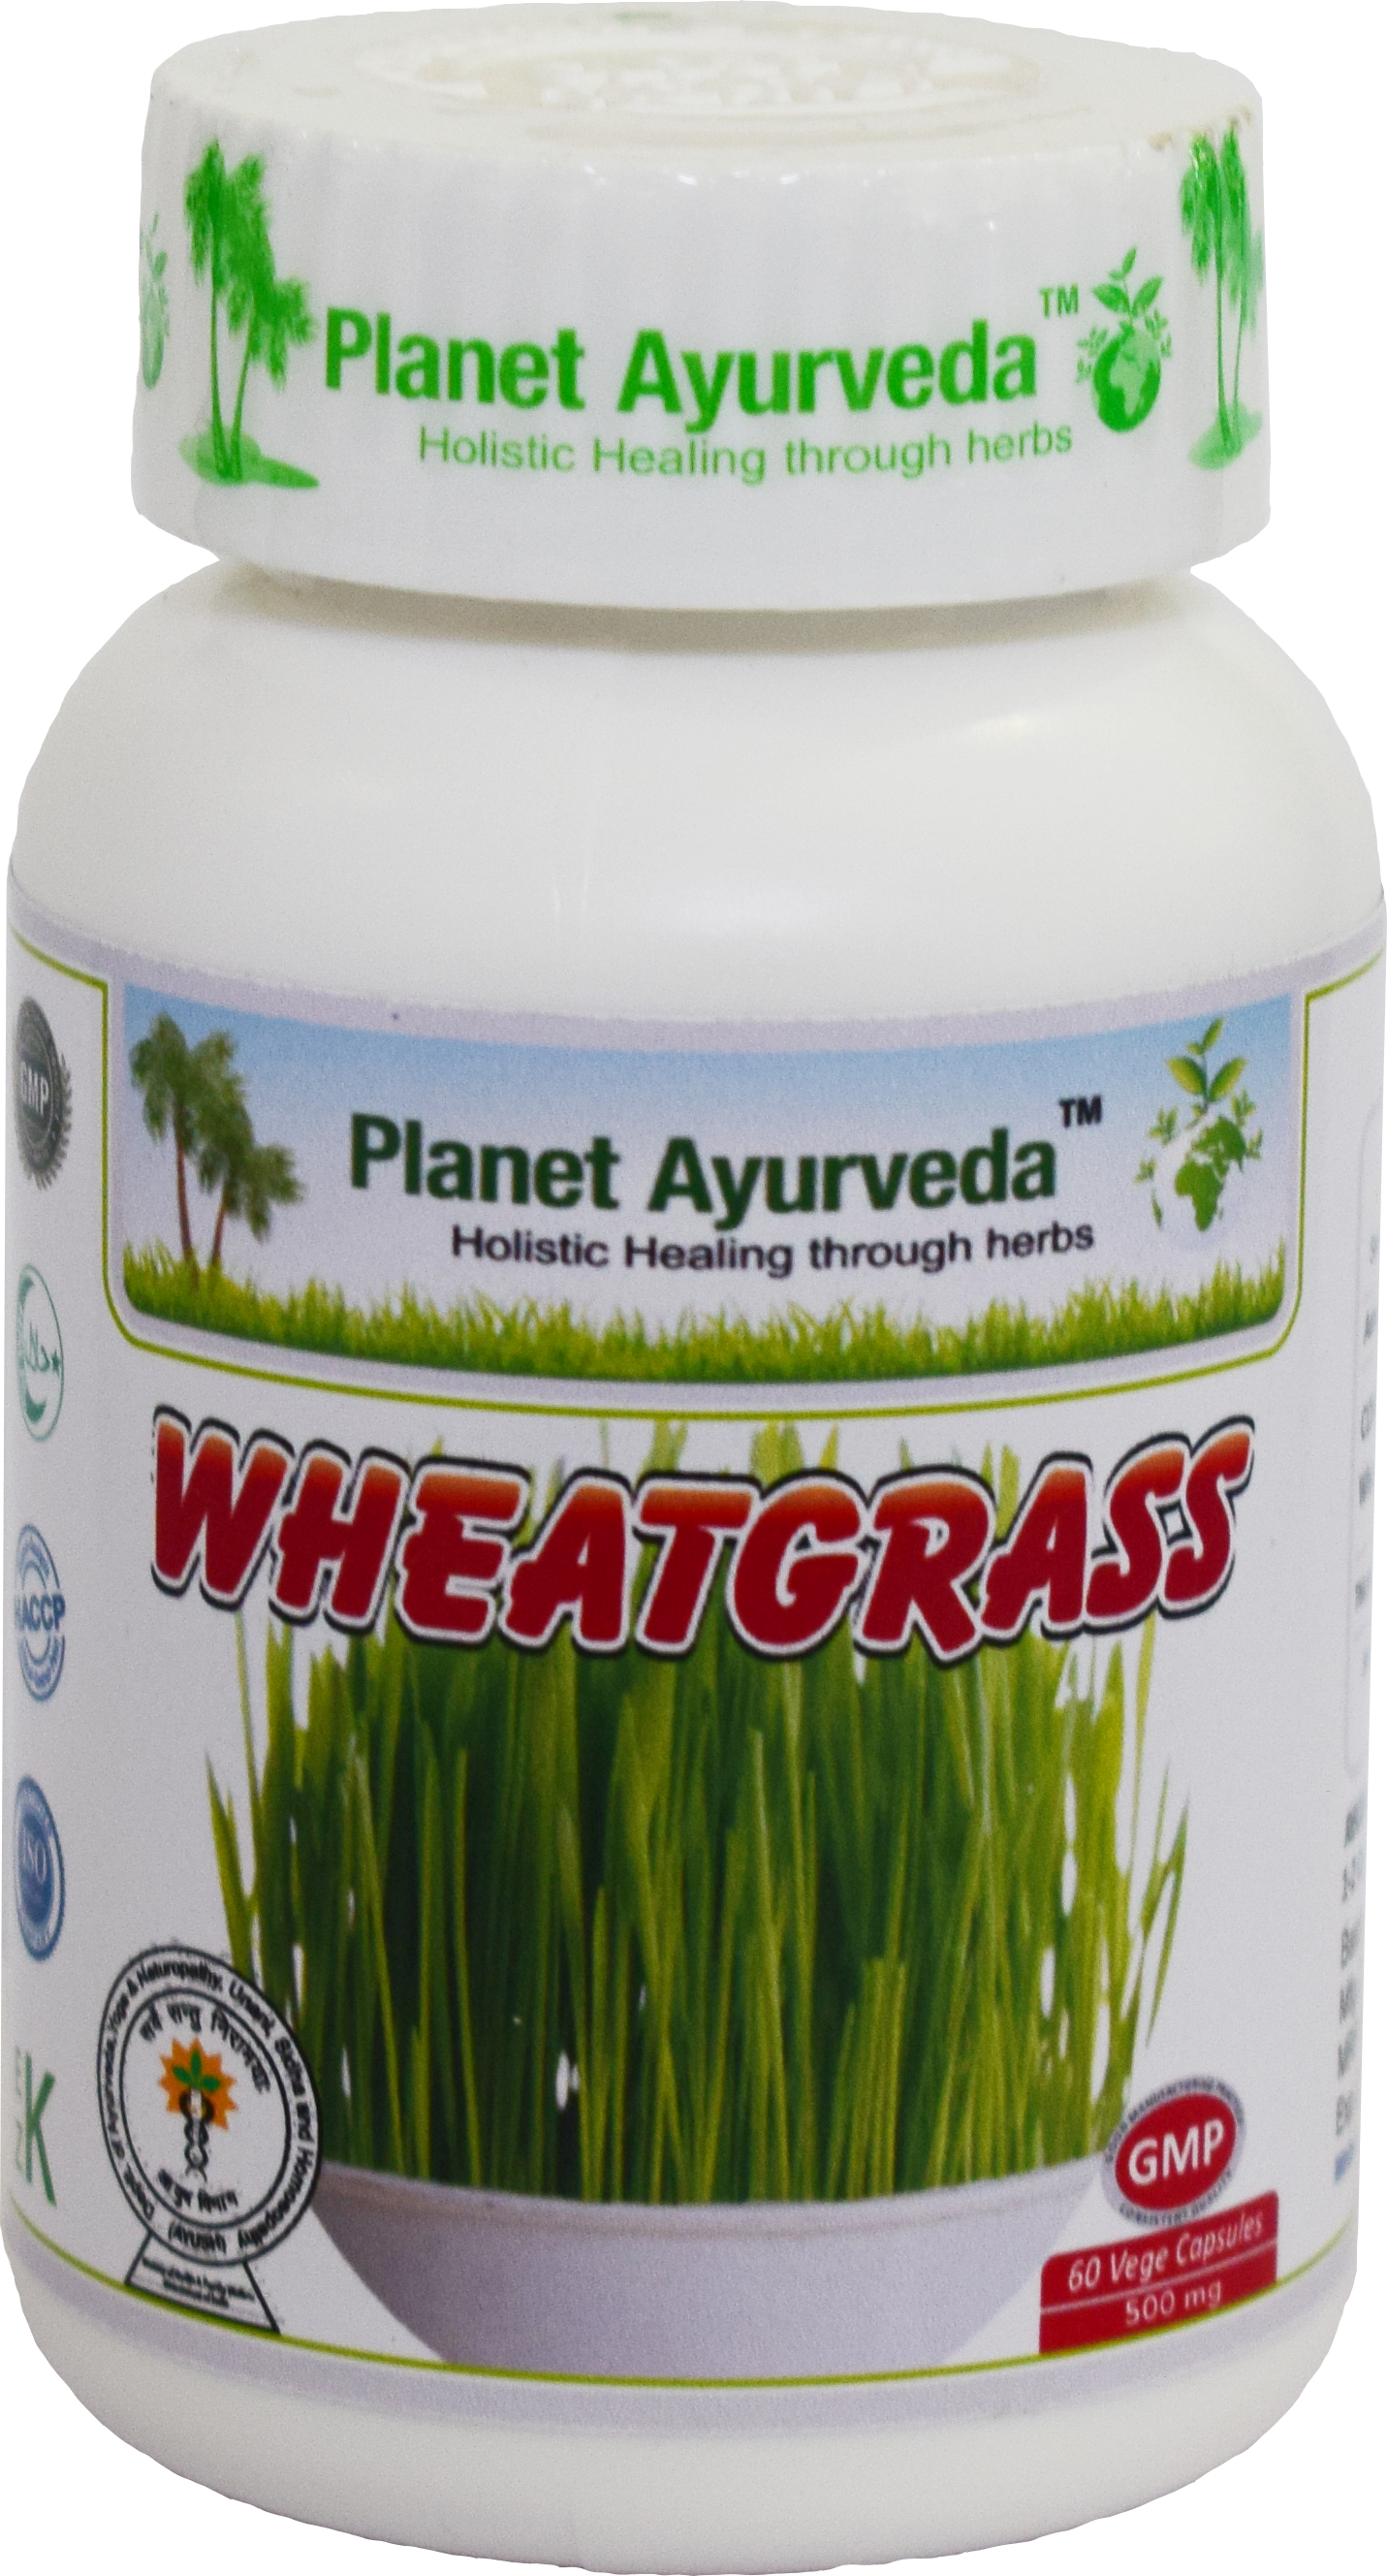 Planet Ayurveda Wheatgrass Capsules